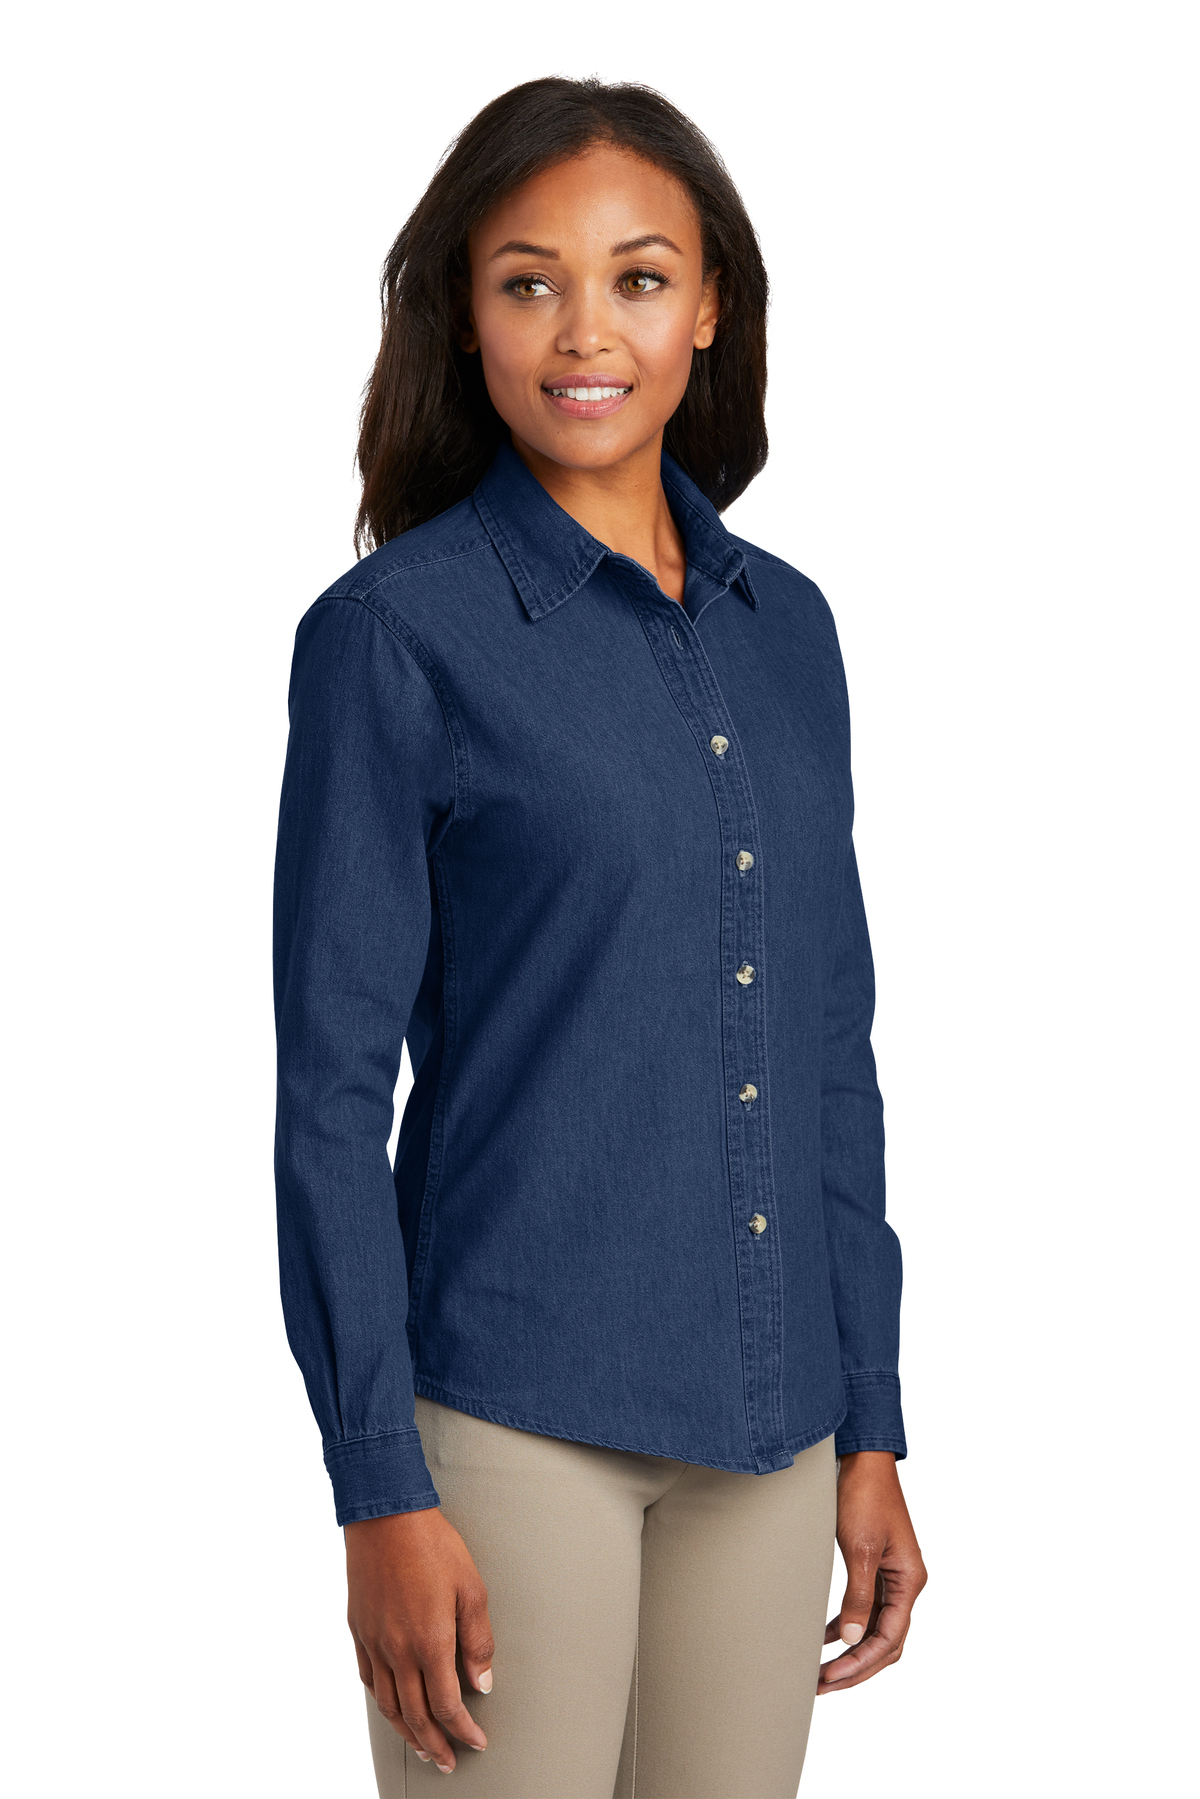 Buy Men Blue Super Slim Fit Casual Shirts Online - 802348 | Peter England